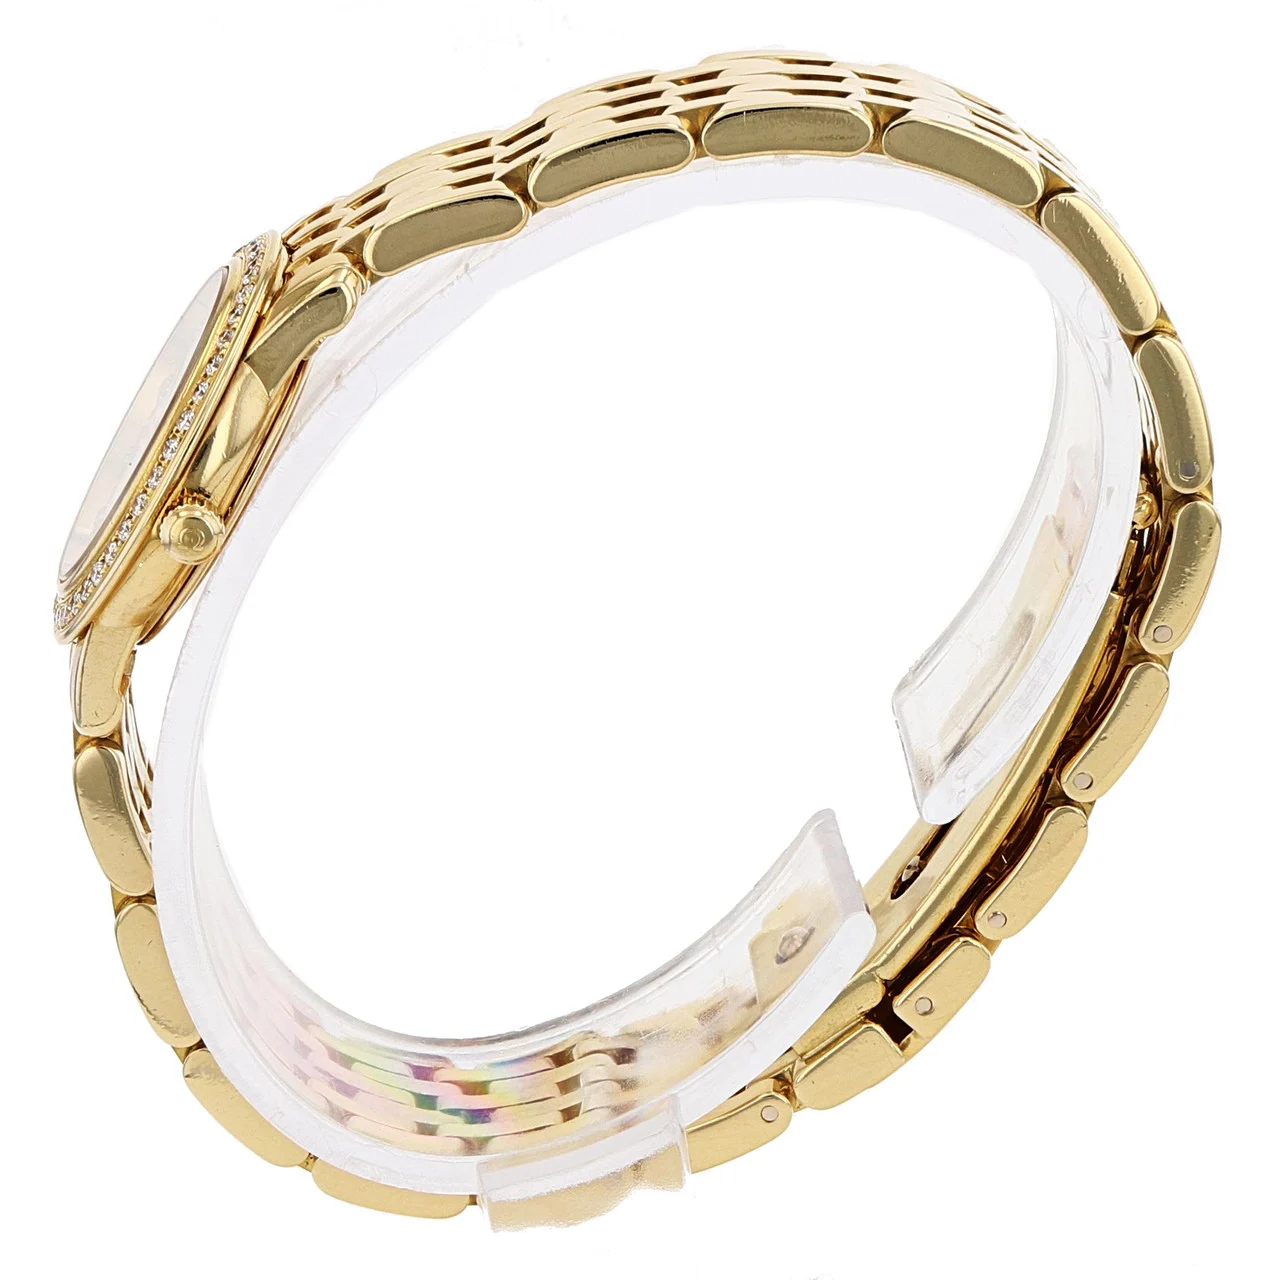 Omega De Ville Prestige 22 Yellow Gold / Diamond-Set / White / Diamond-Set / Bracelet 4175.35.00  Listing Image 5